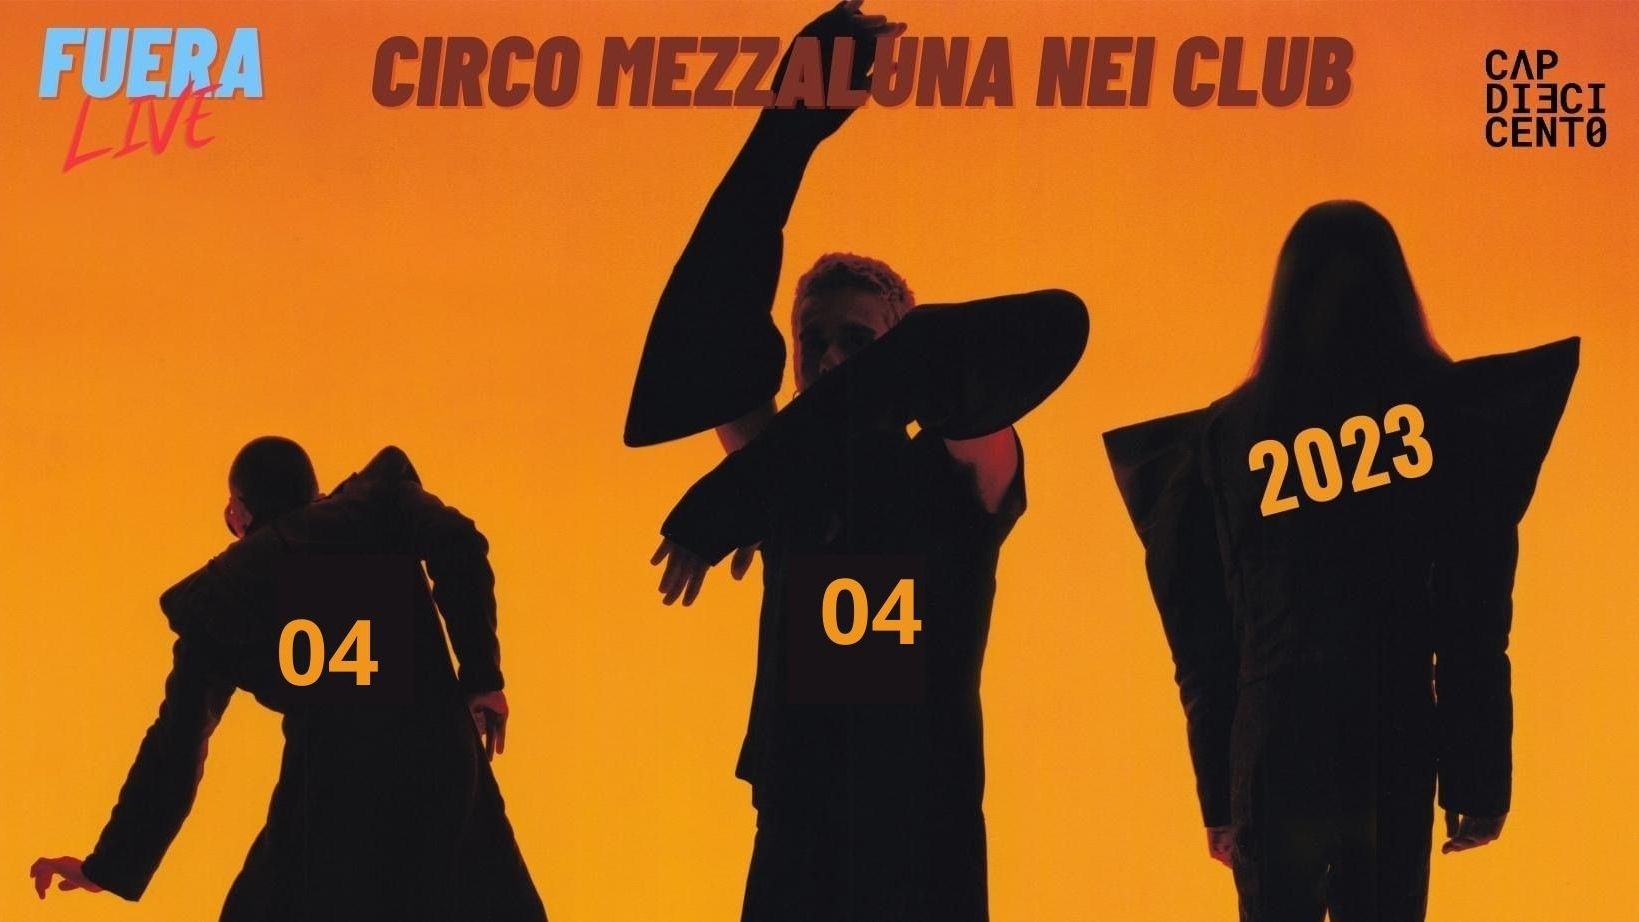 Fuera "Circo Mezzaluna Nei Club" Tour